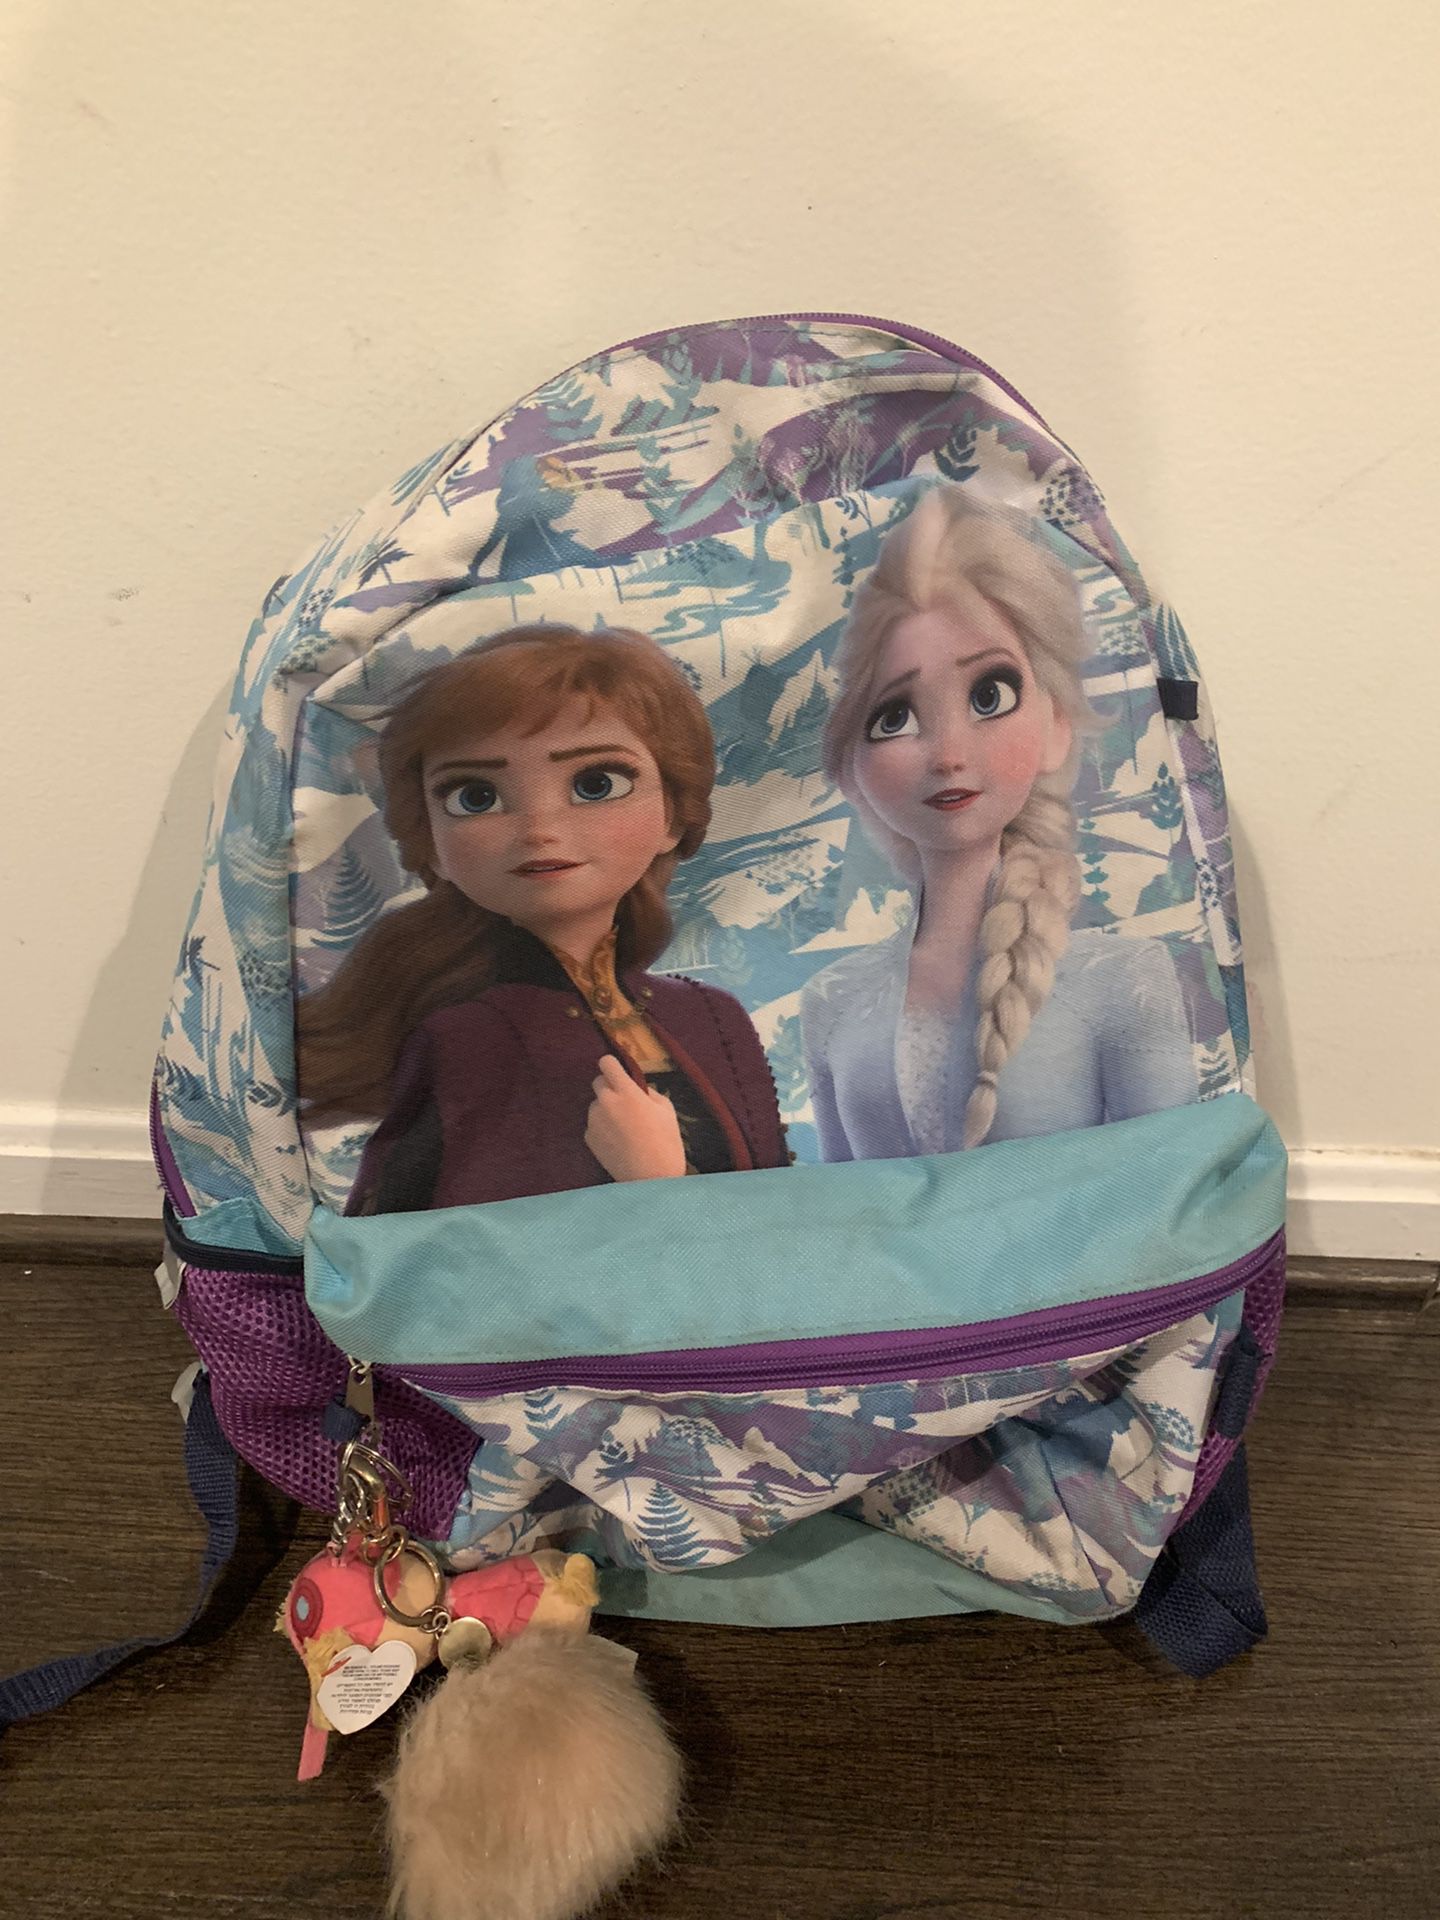 Frozen Backpack 